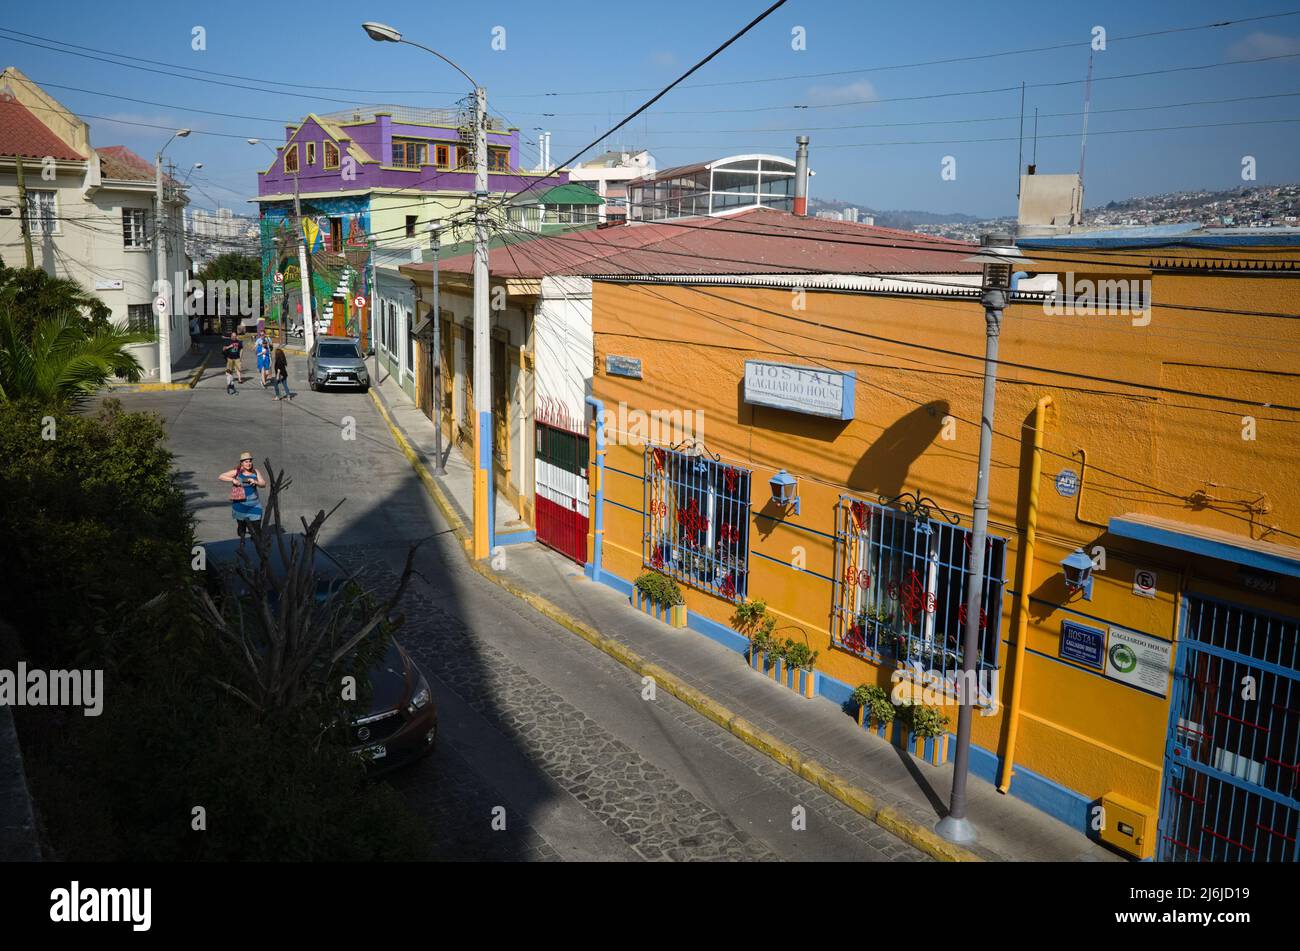 Valparaiso, Chile - Februar 2020: Farbenfrohe Häuser mit Graffiti im historischen Viertel cerro Concepcion Stockfoto